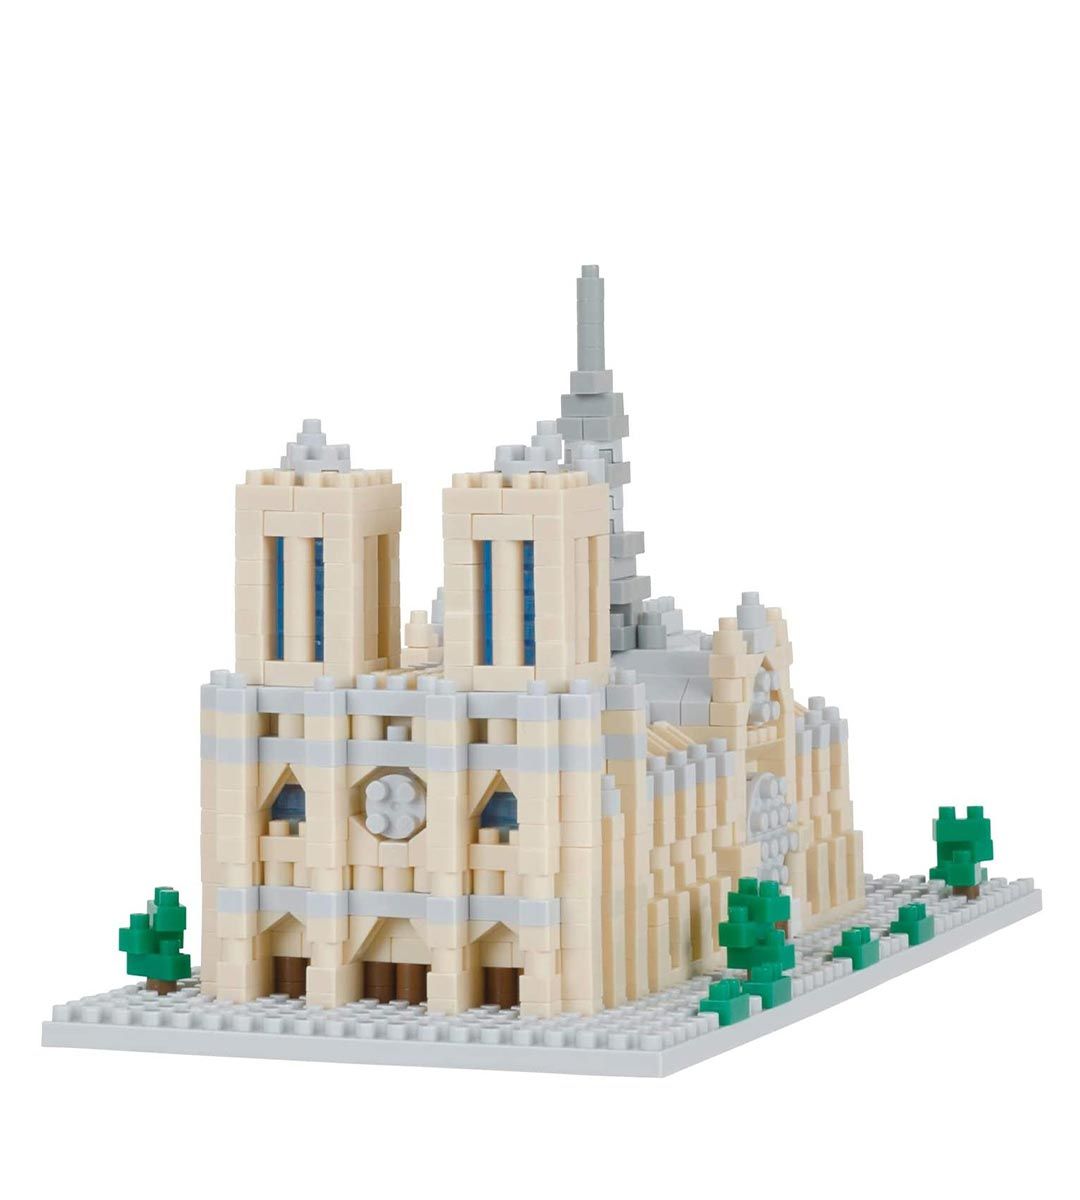 Nanoblock - Catedral de Notre -Dame de Paris - NBH 205